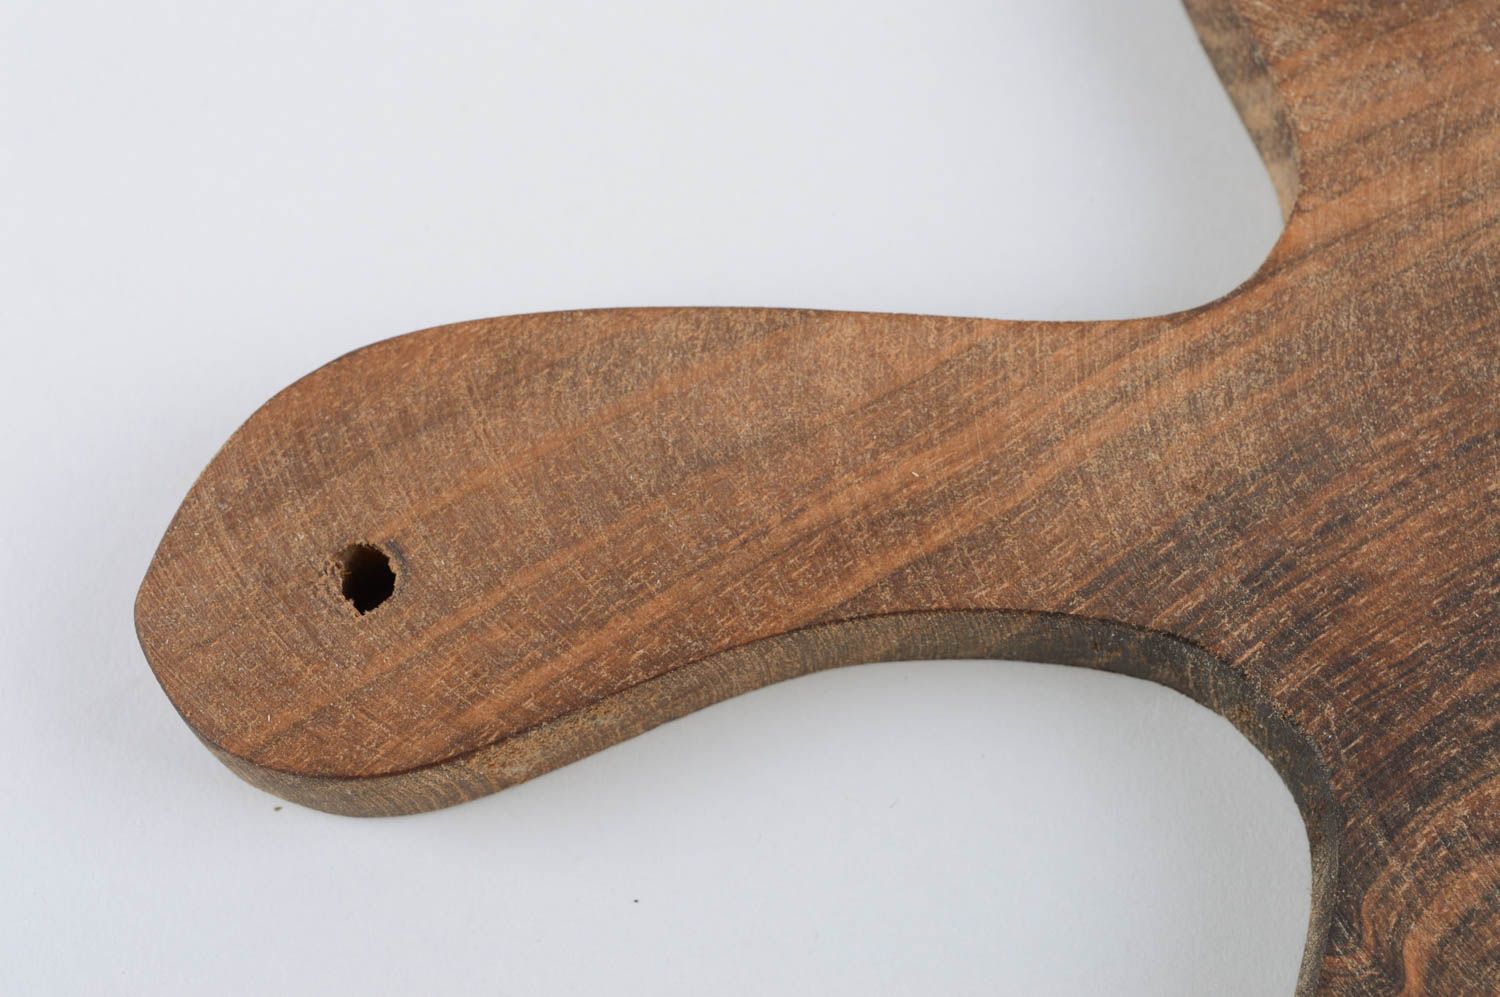 Shan Wooden Chopping Board – Buildmat